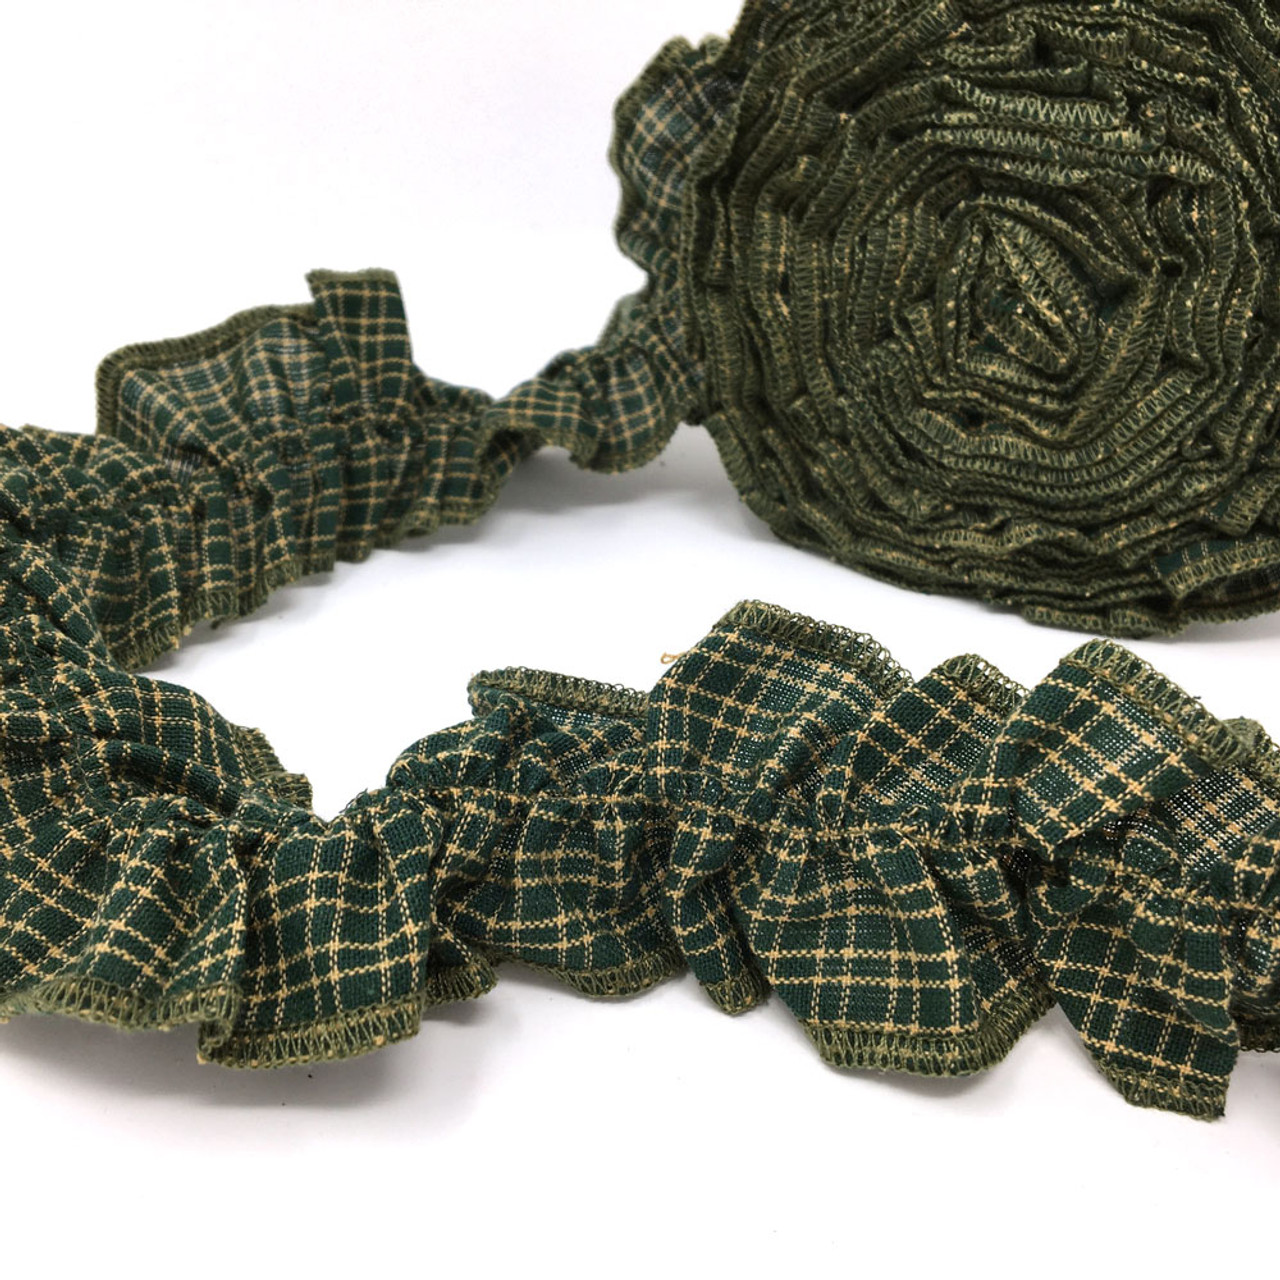 Green 1 Ruffled Fabric Trim Garland -12 feet